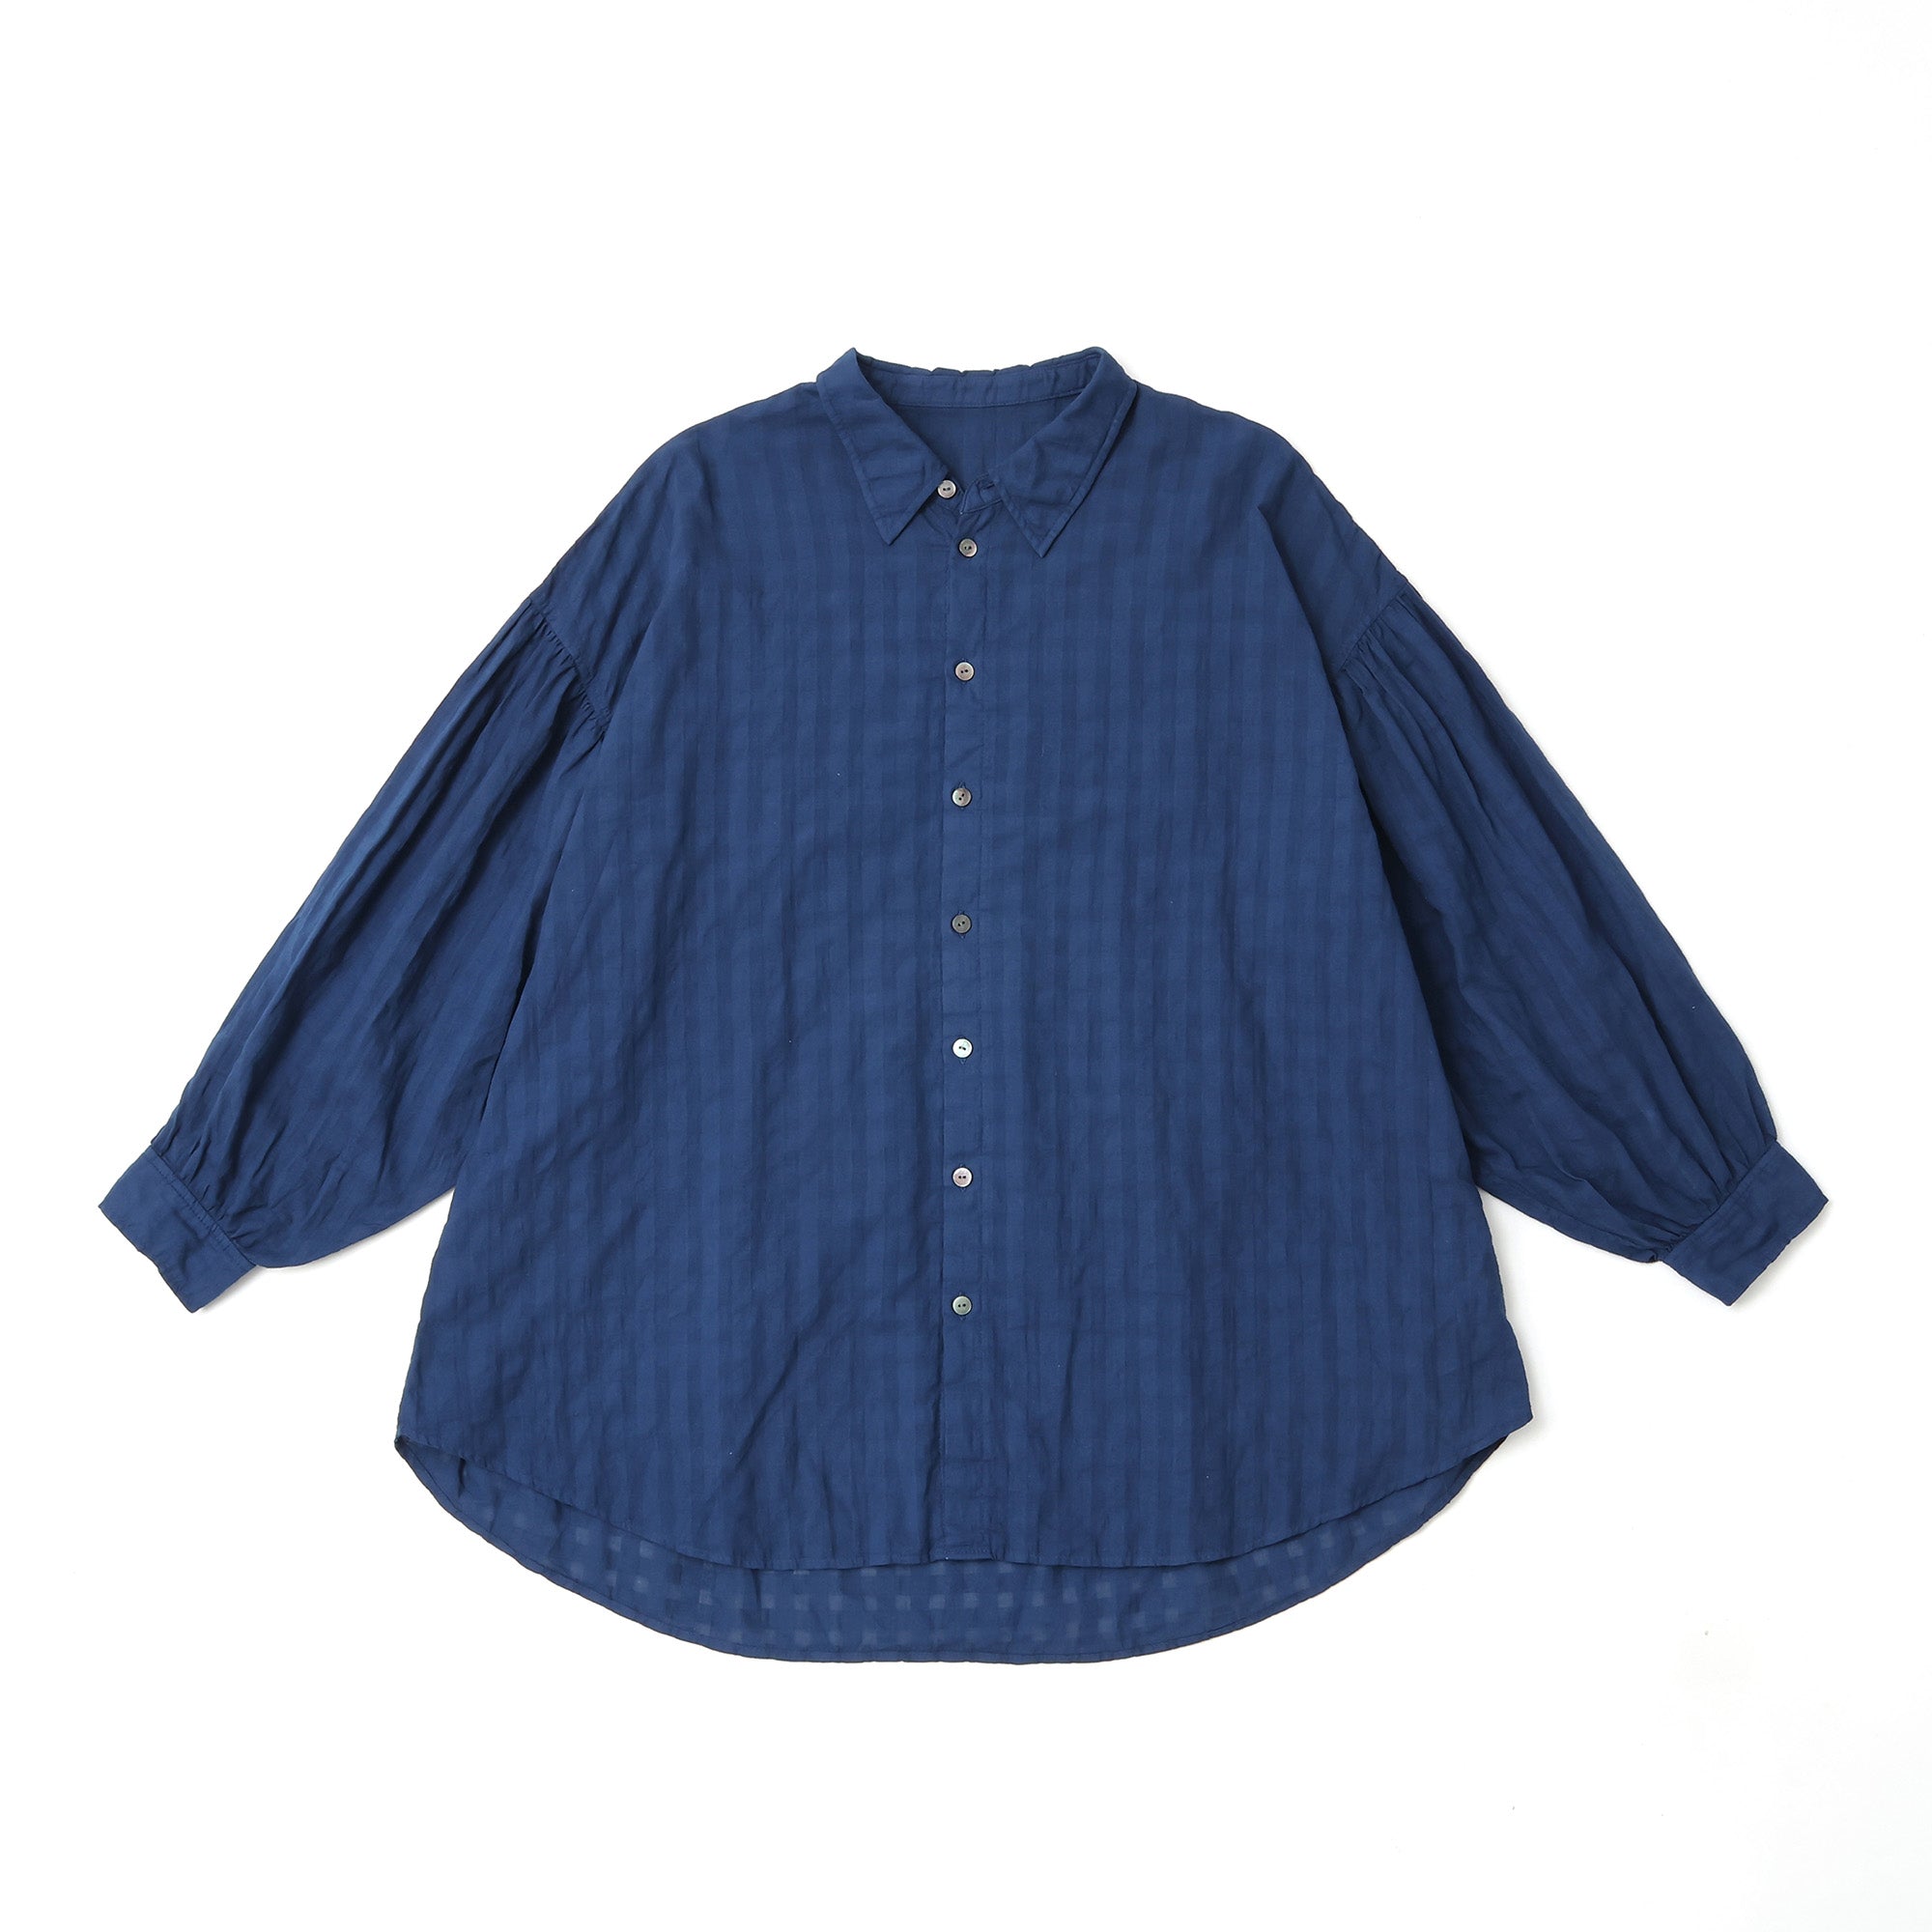 KOTONE Organic cotton relaxed shirt navy indigo made in japan